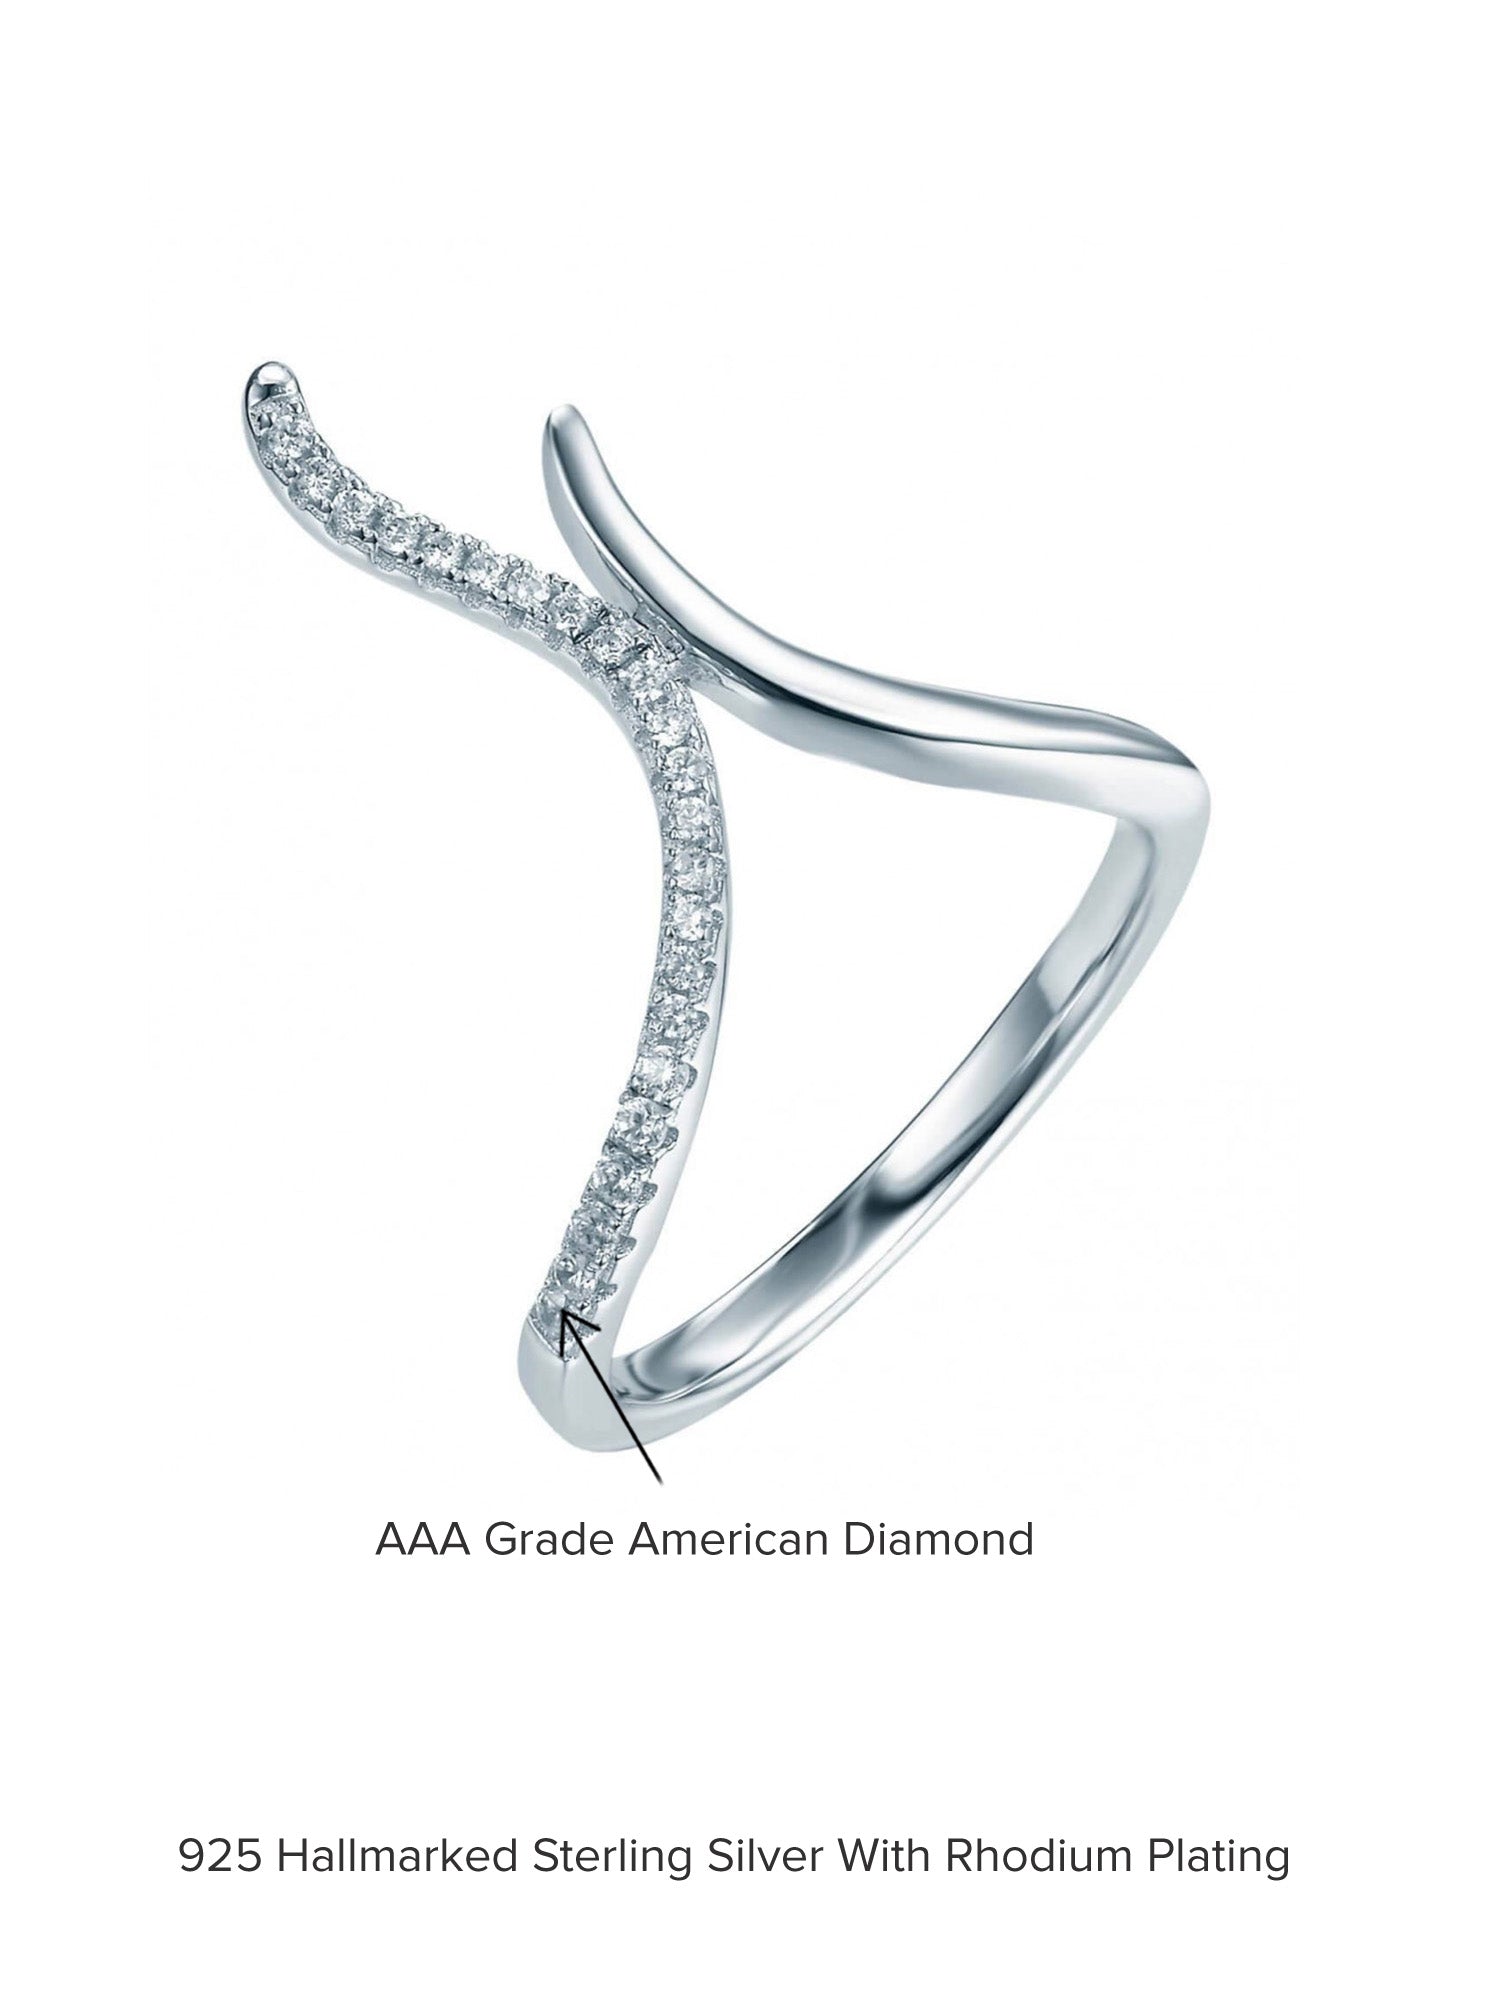 AMERICAN DIAMOND DESIGNER 925 SILVER RING-6